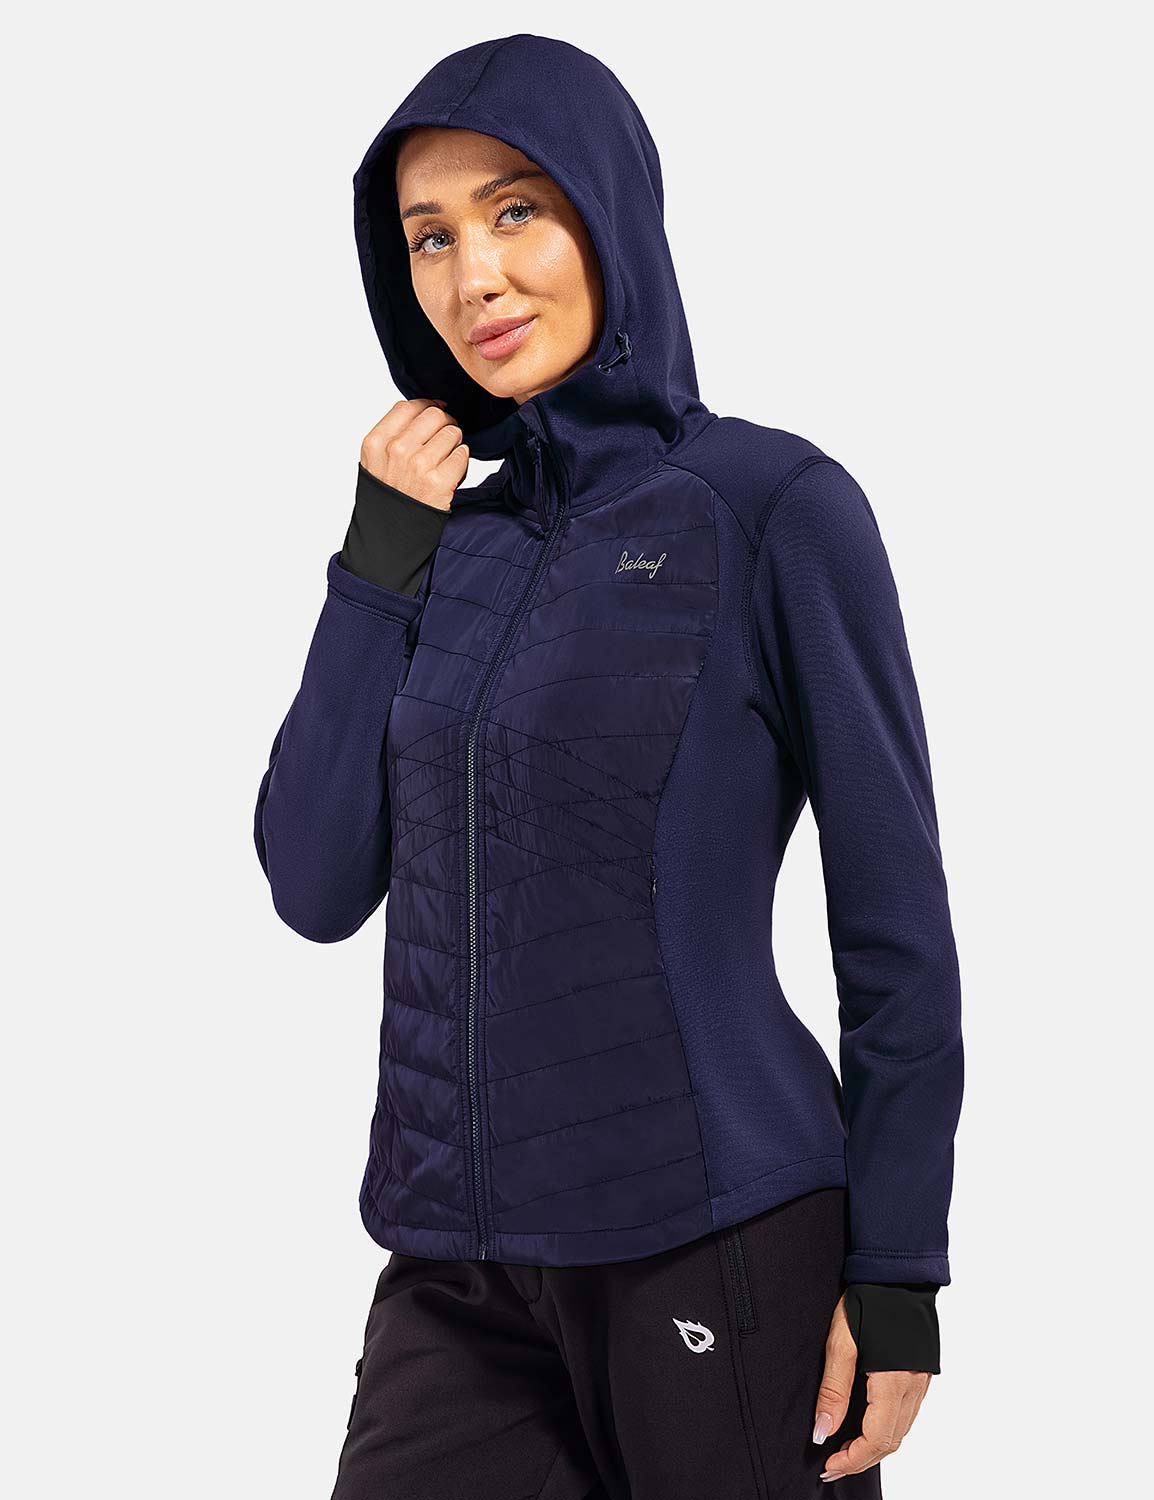 Baleaf Women's Triumph Thermal Water-Resistant Hooded Jacket cga030 Peacoat Side